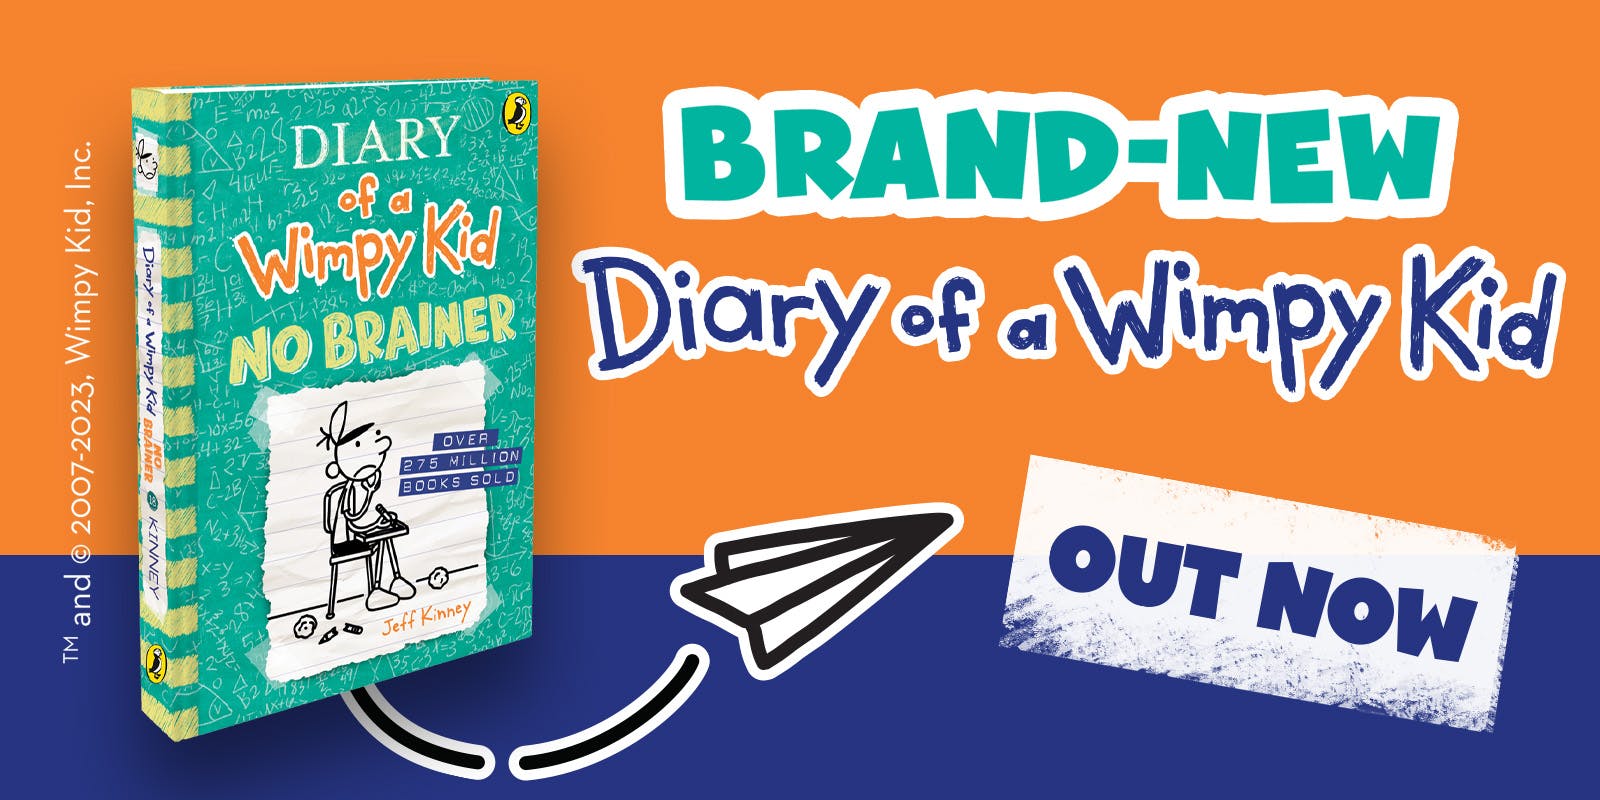 No Brainer Diary of Wimpy Kid 18 by Jeff Kinney